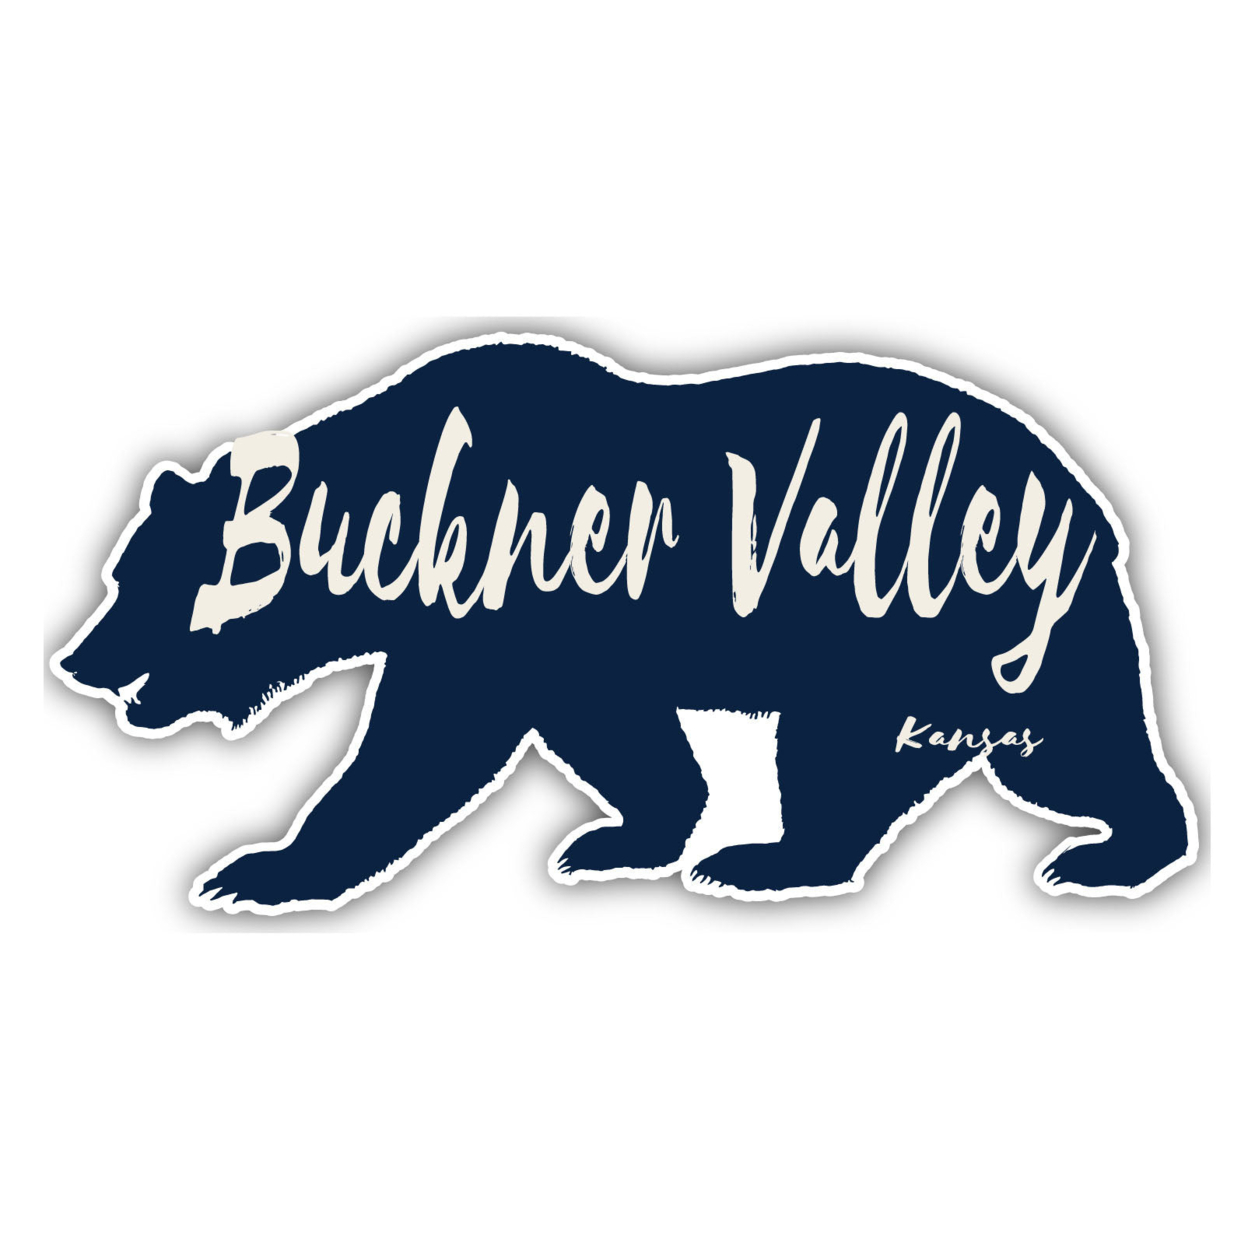 Buckner Valley Kansas Souvenir Decorative Stickers (Choose Theme And Size) - Single Unit, 10-Inch, Bear